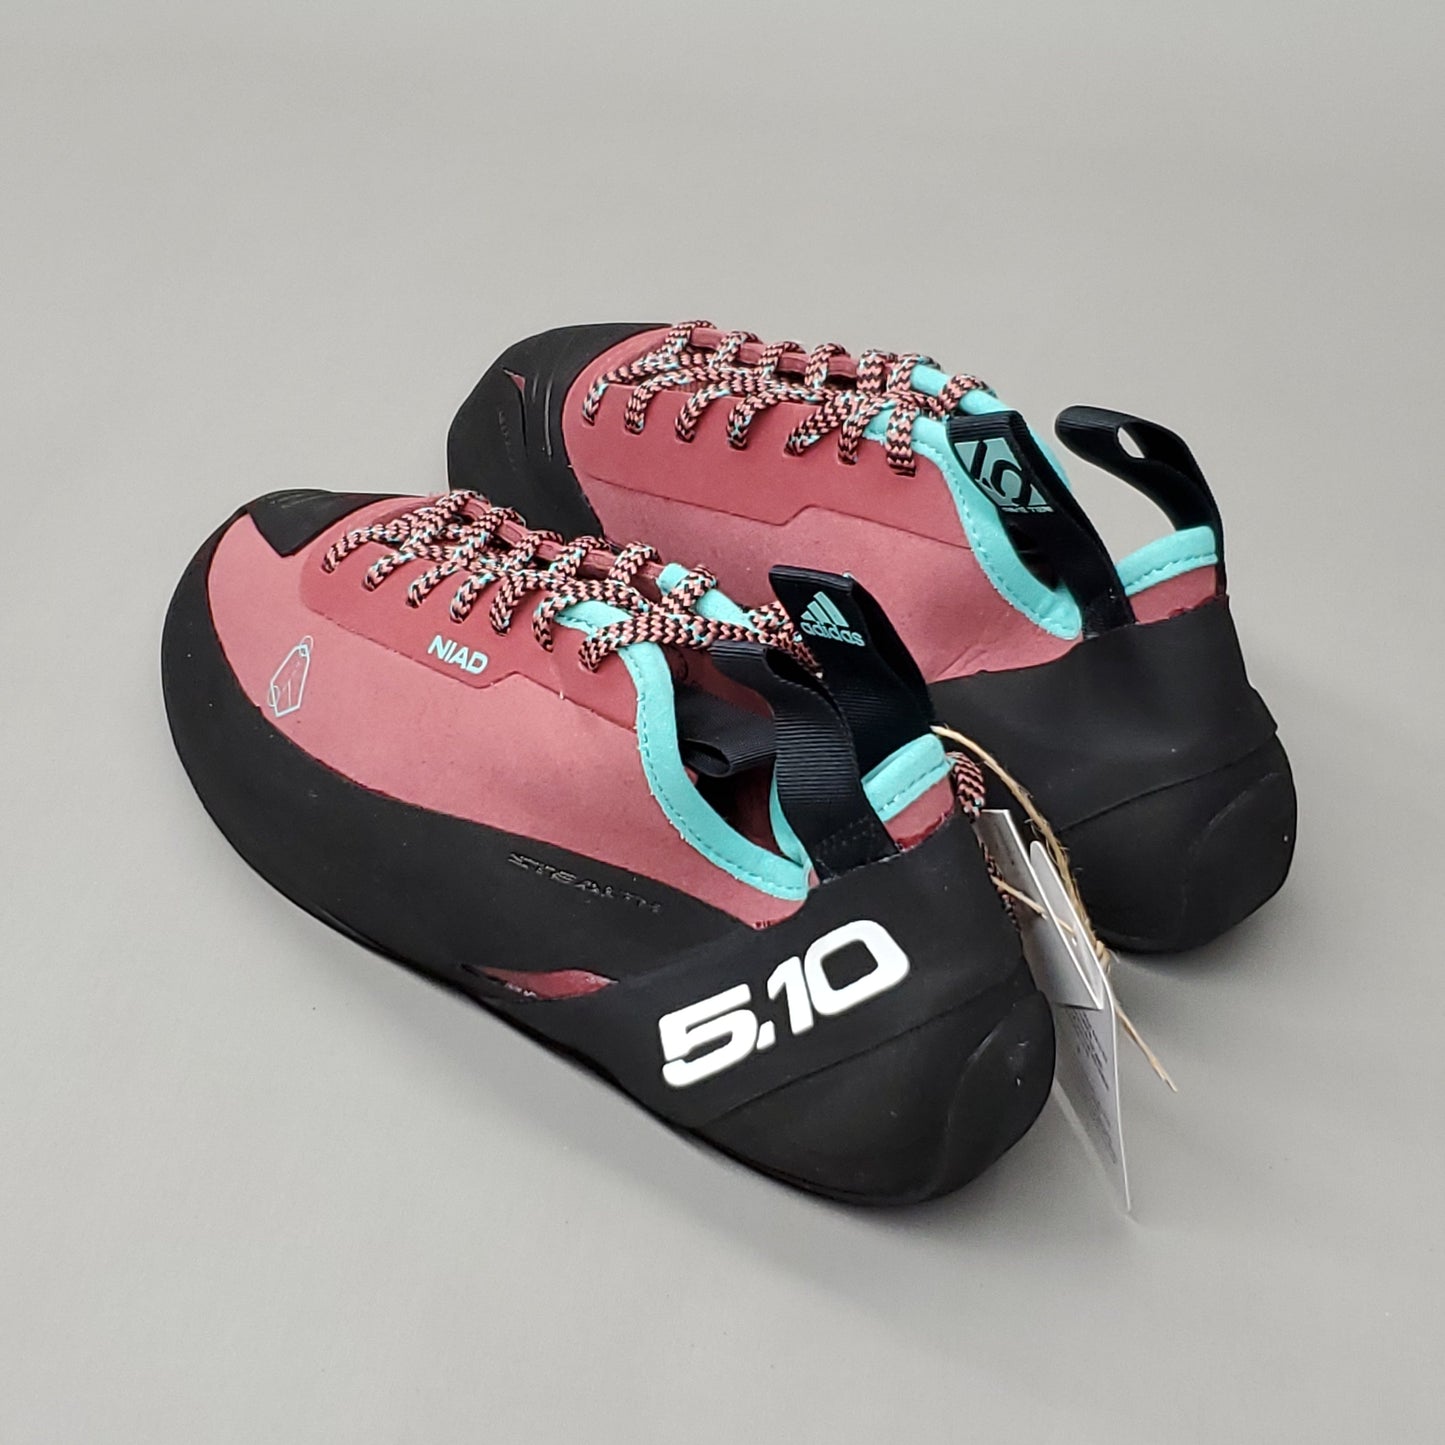 ADIDAS Five Ten Niad Lace W Climbing Shoes Women's Sz 7.5 Crew Red FW2874 (New)